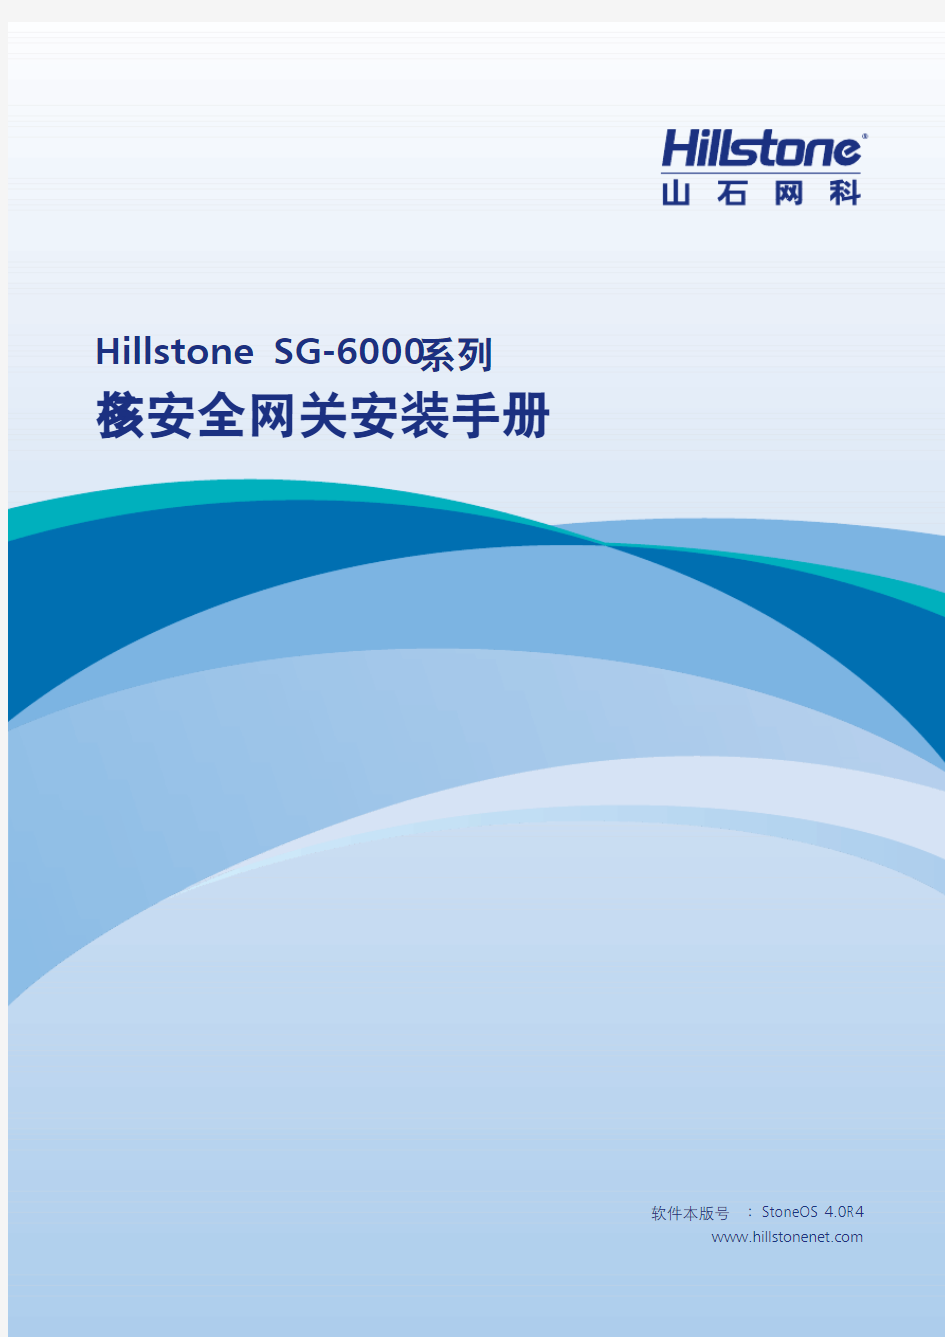 Hillstone SG-6000多核安全网关安装手册_4.0R4